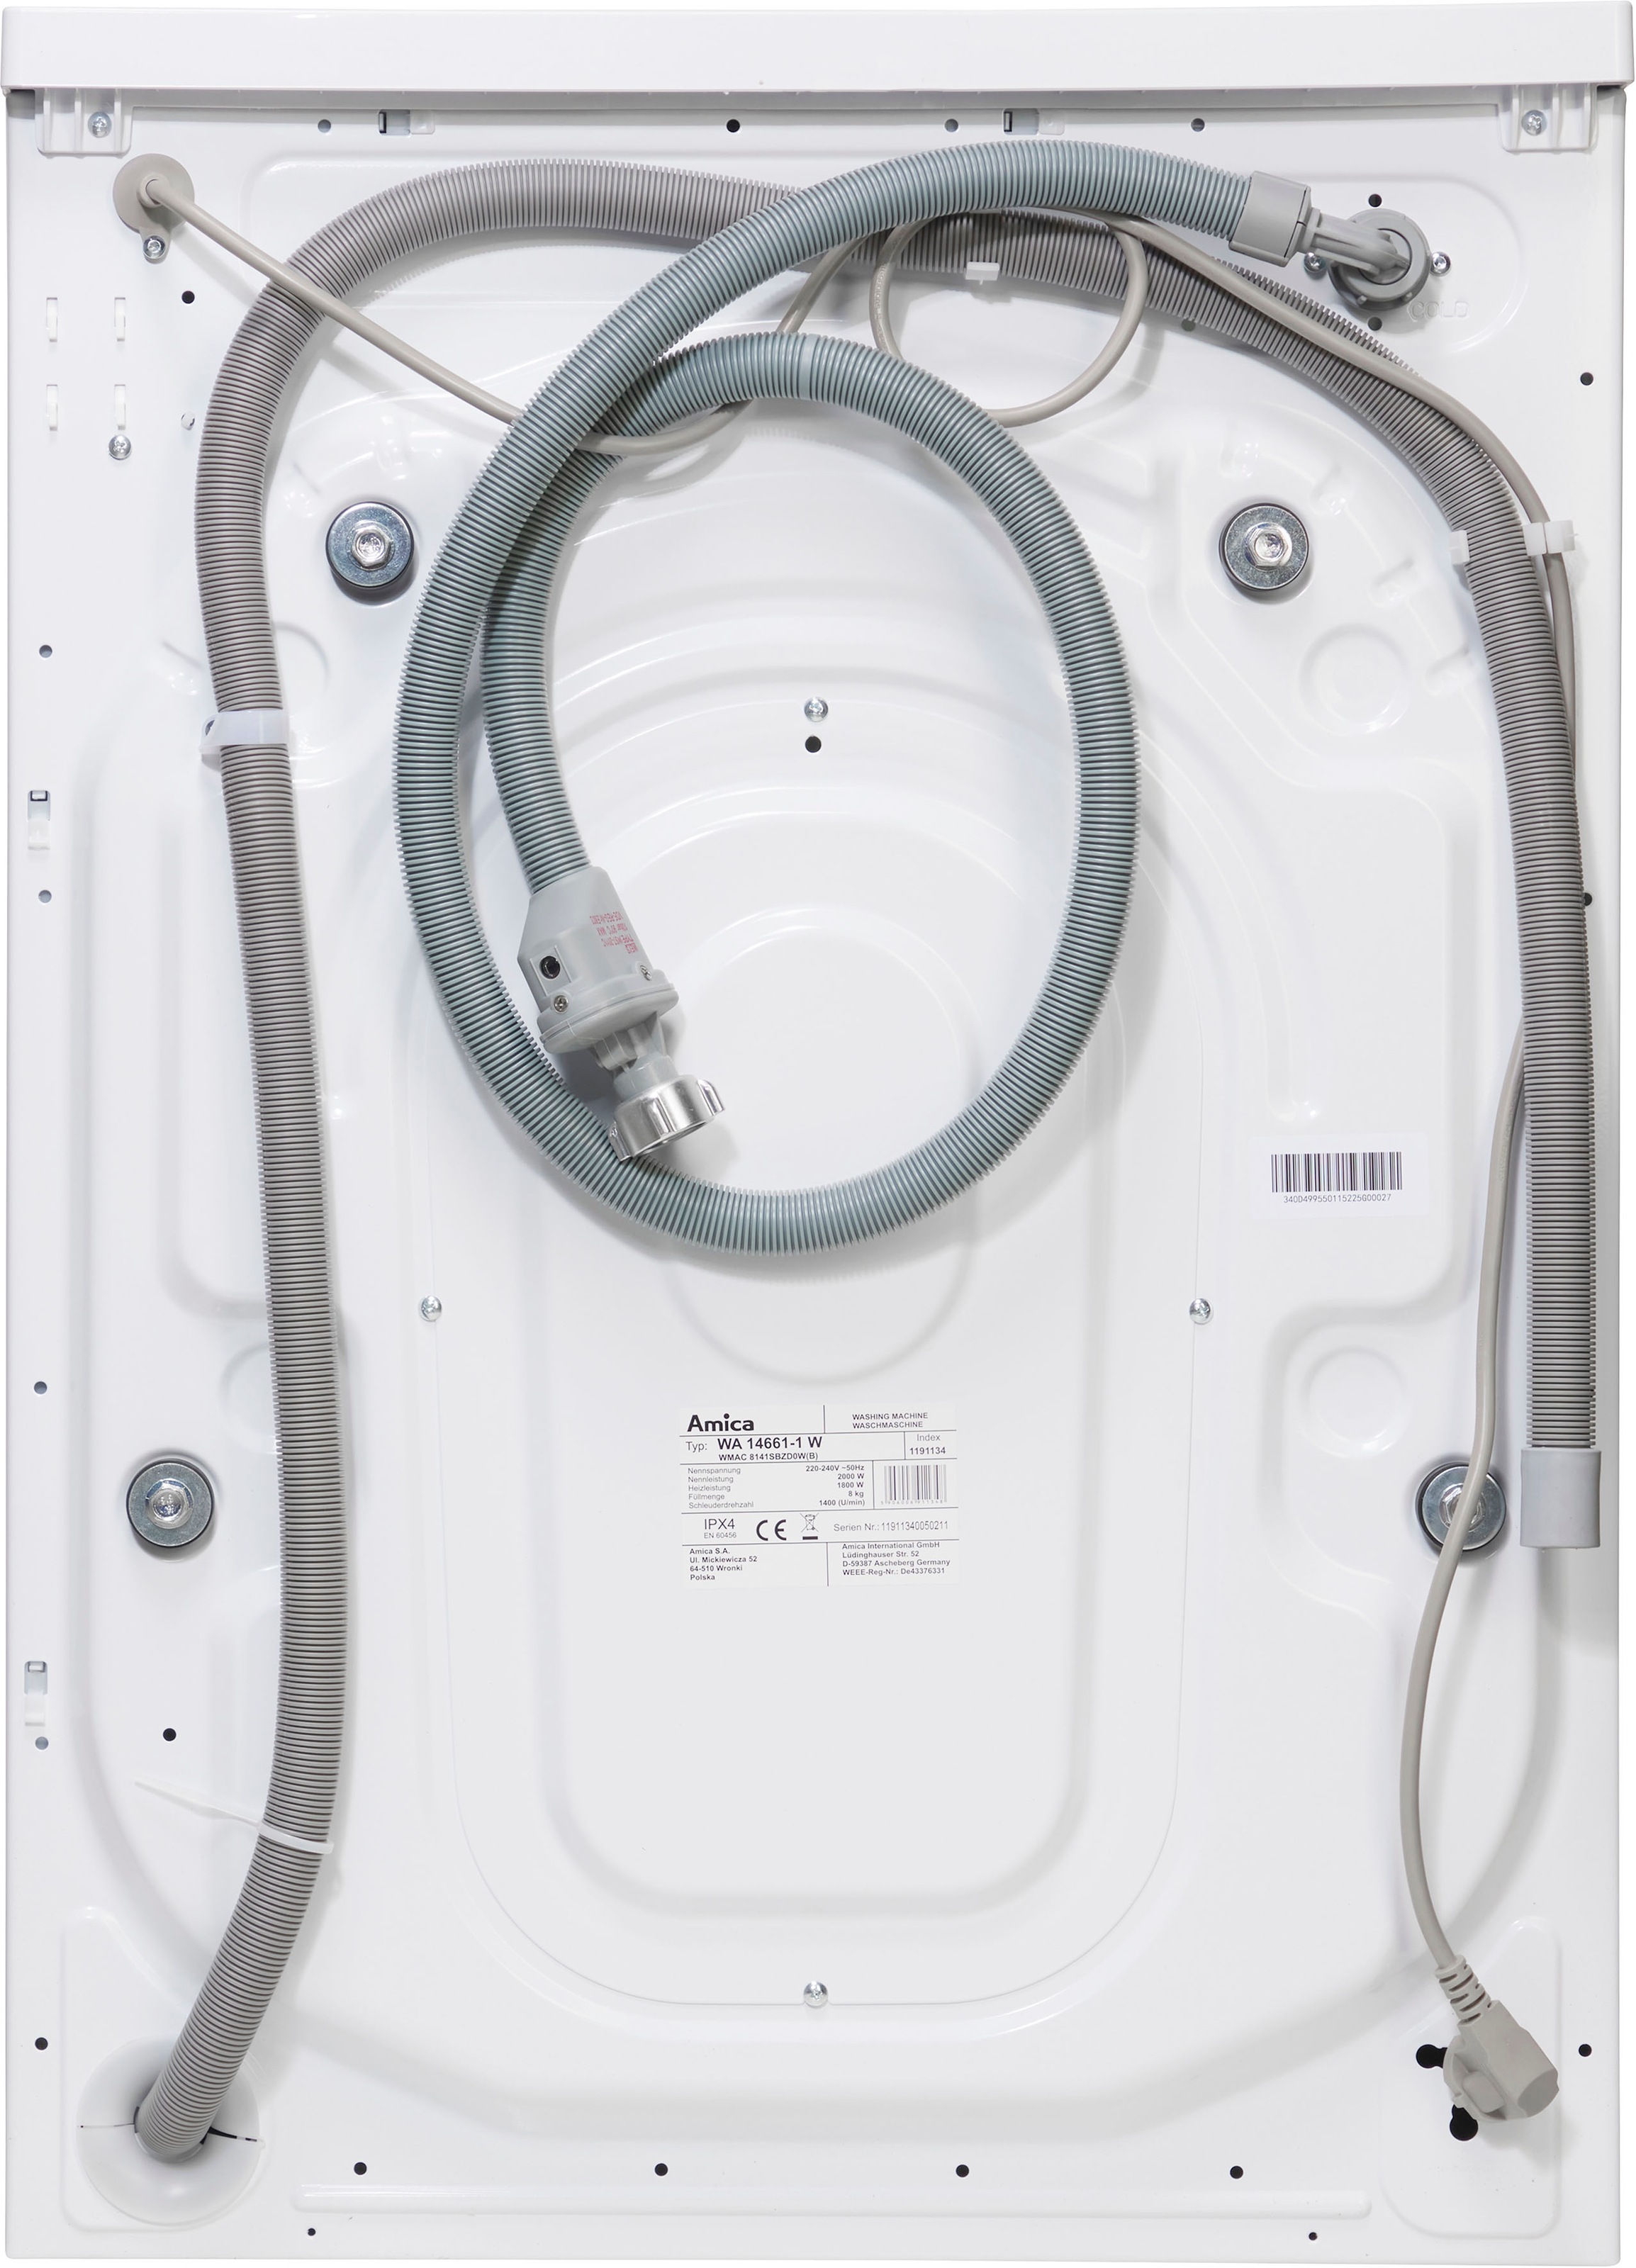 Amica Waschmaschine W«, Line, 1400 W, U/min Raten kg, bestellen auf WA 14661-1 »WA 8 Classic 14661-1